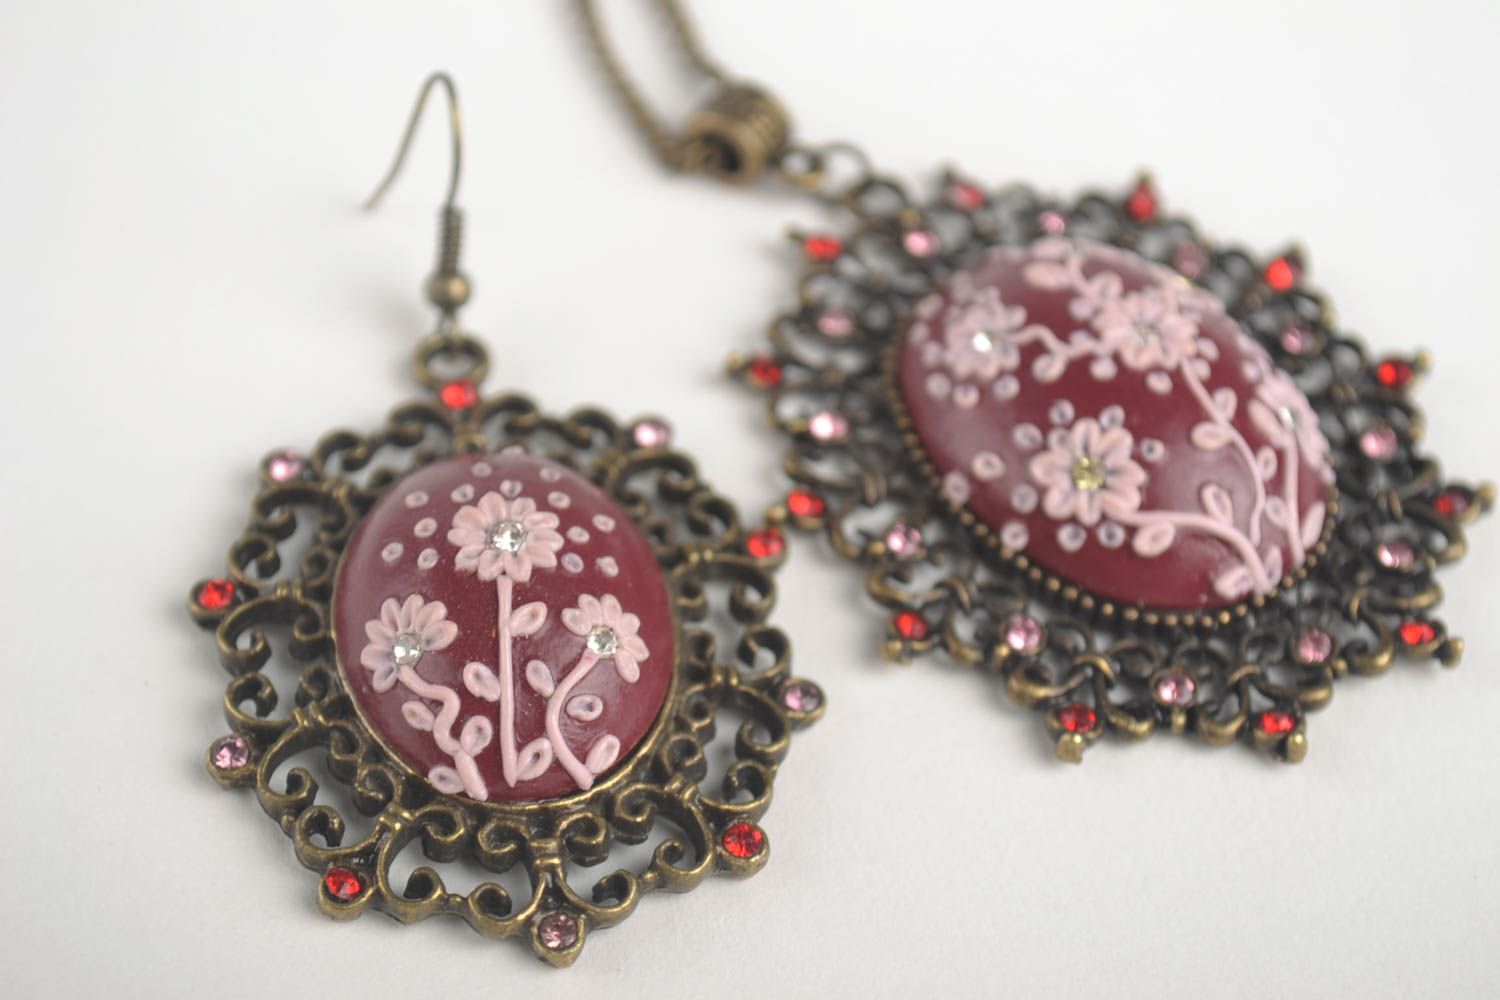 Handmade pendant handmade earrings polymer clay jewelry unusual gift for girl photo 4